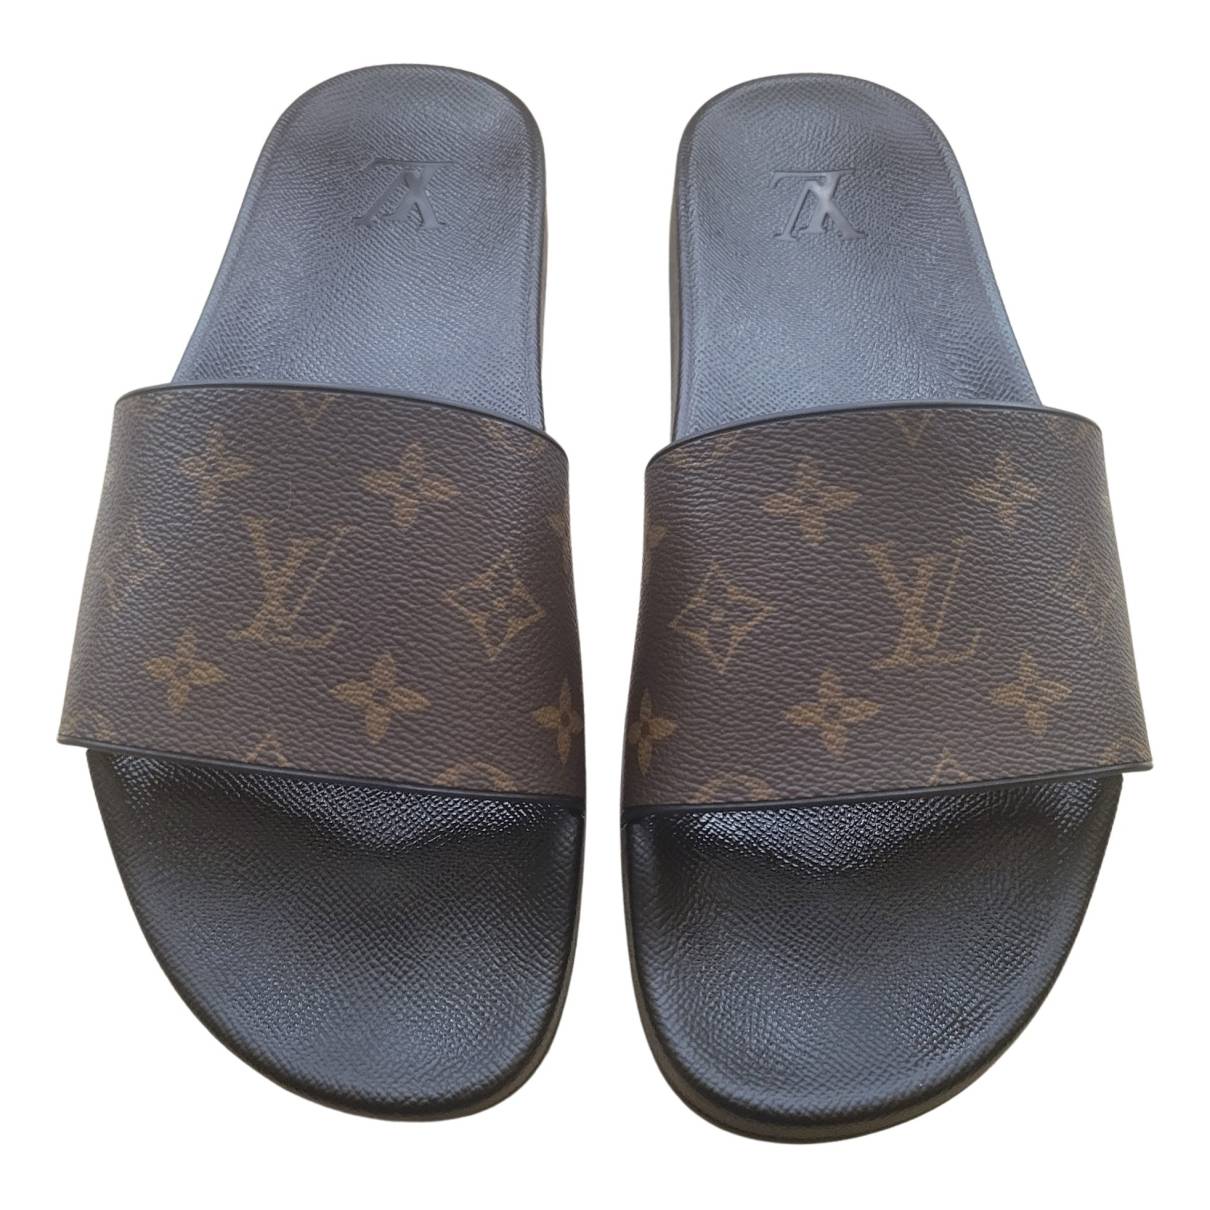 Waterfront sandals Louis Vuitton White size 41 EU in Rubber - 38096492